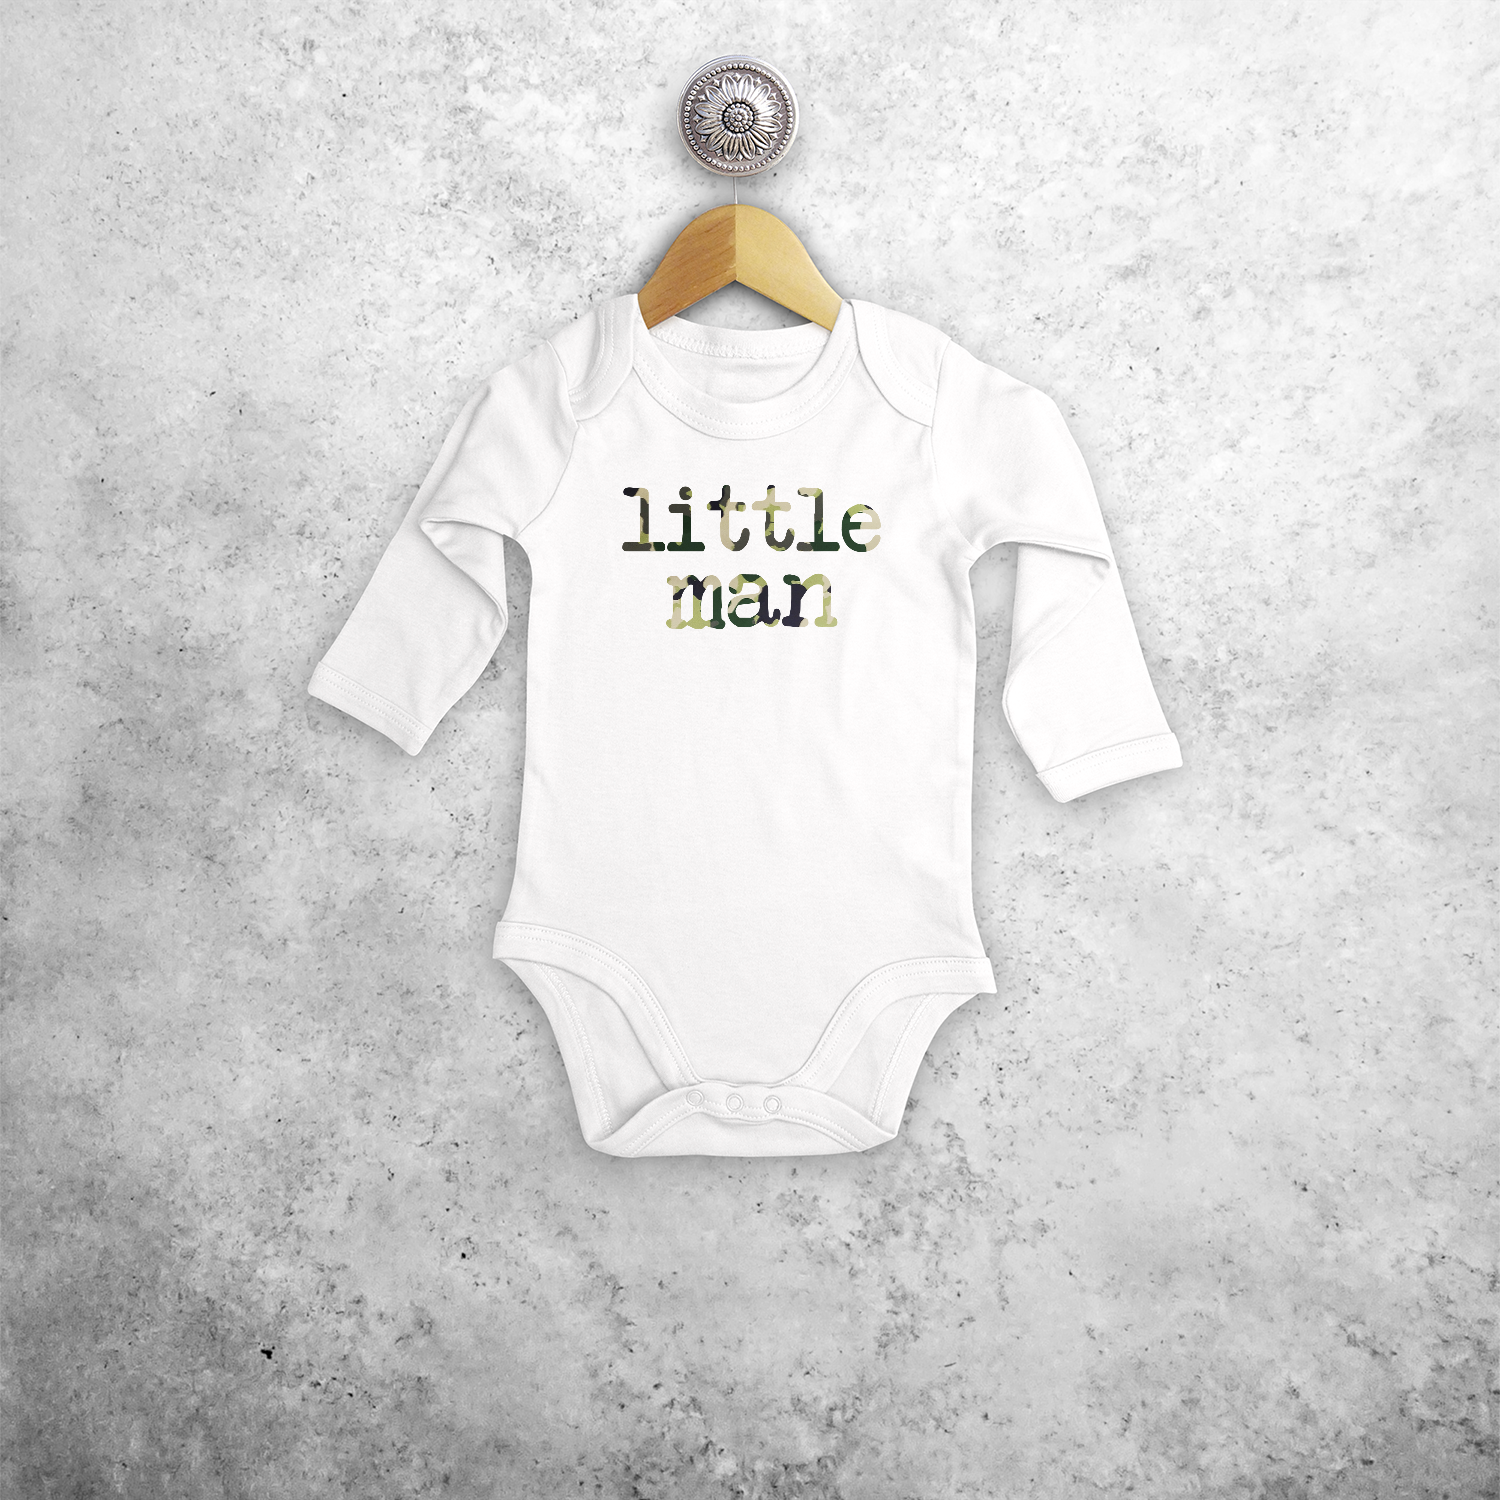 'Little man' baby longsleeve bodysuit